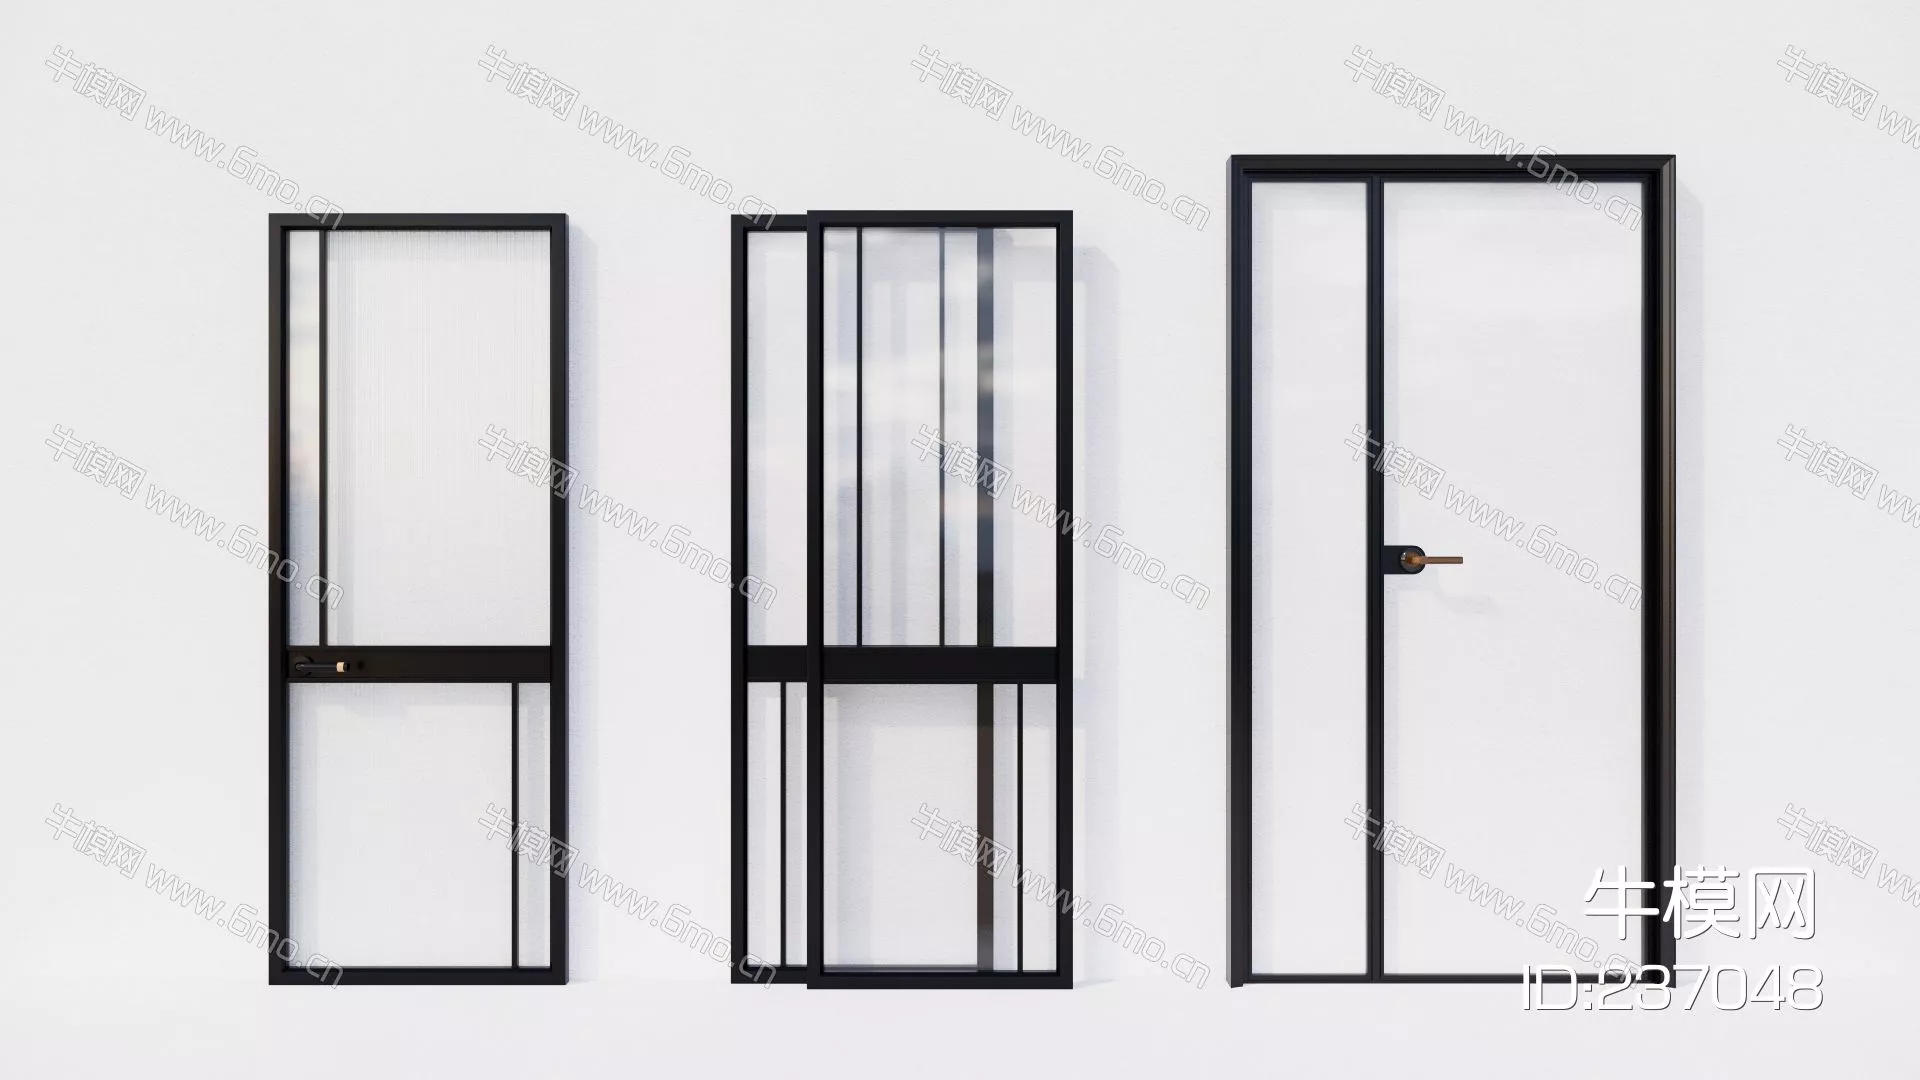 MODERN DOOR AND WINDOWS - SKETCHUP 3D MODEL - ENSCAPE - 237048